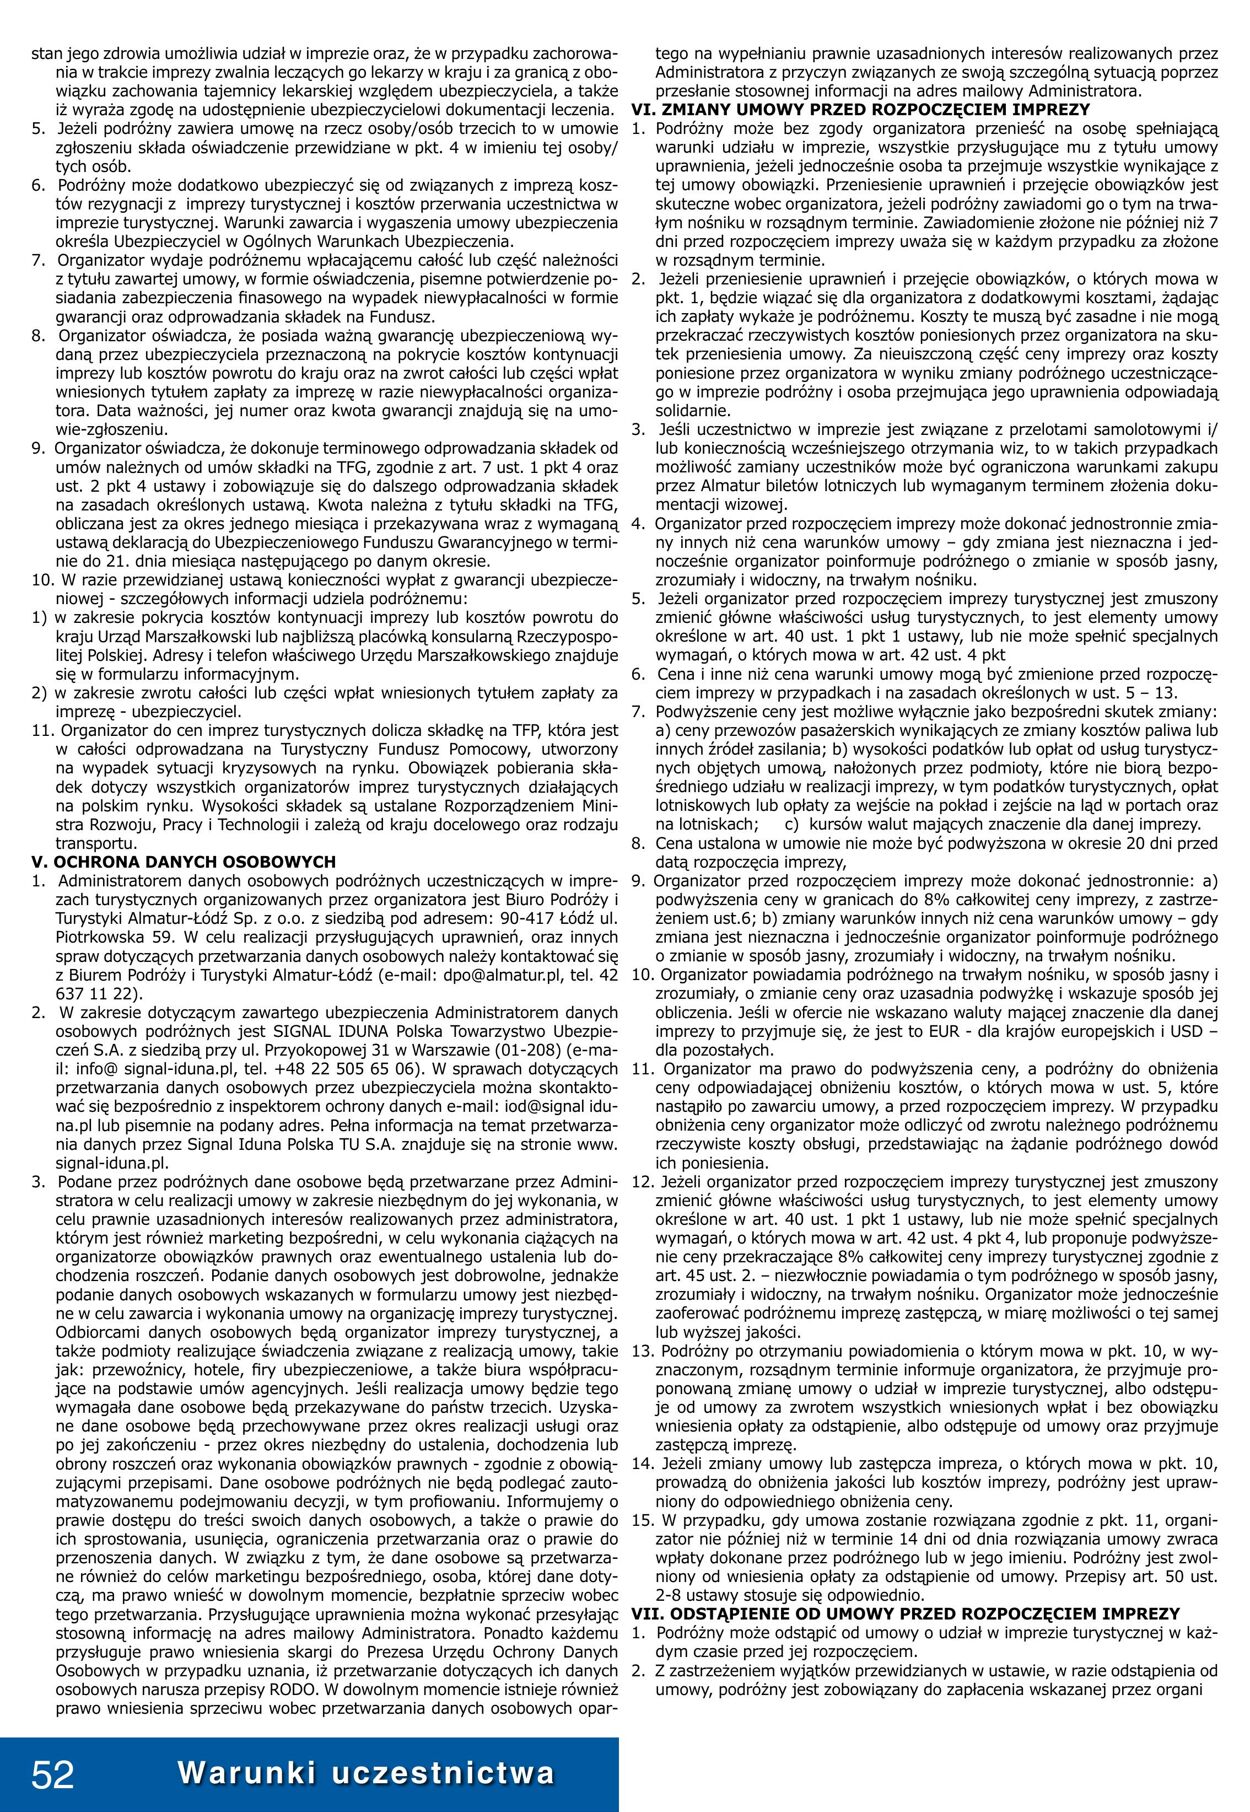 Gazetka Almatur 01.01.2022 - 31.12.2022